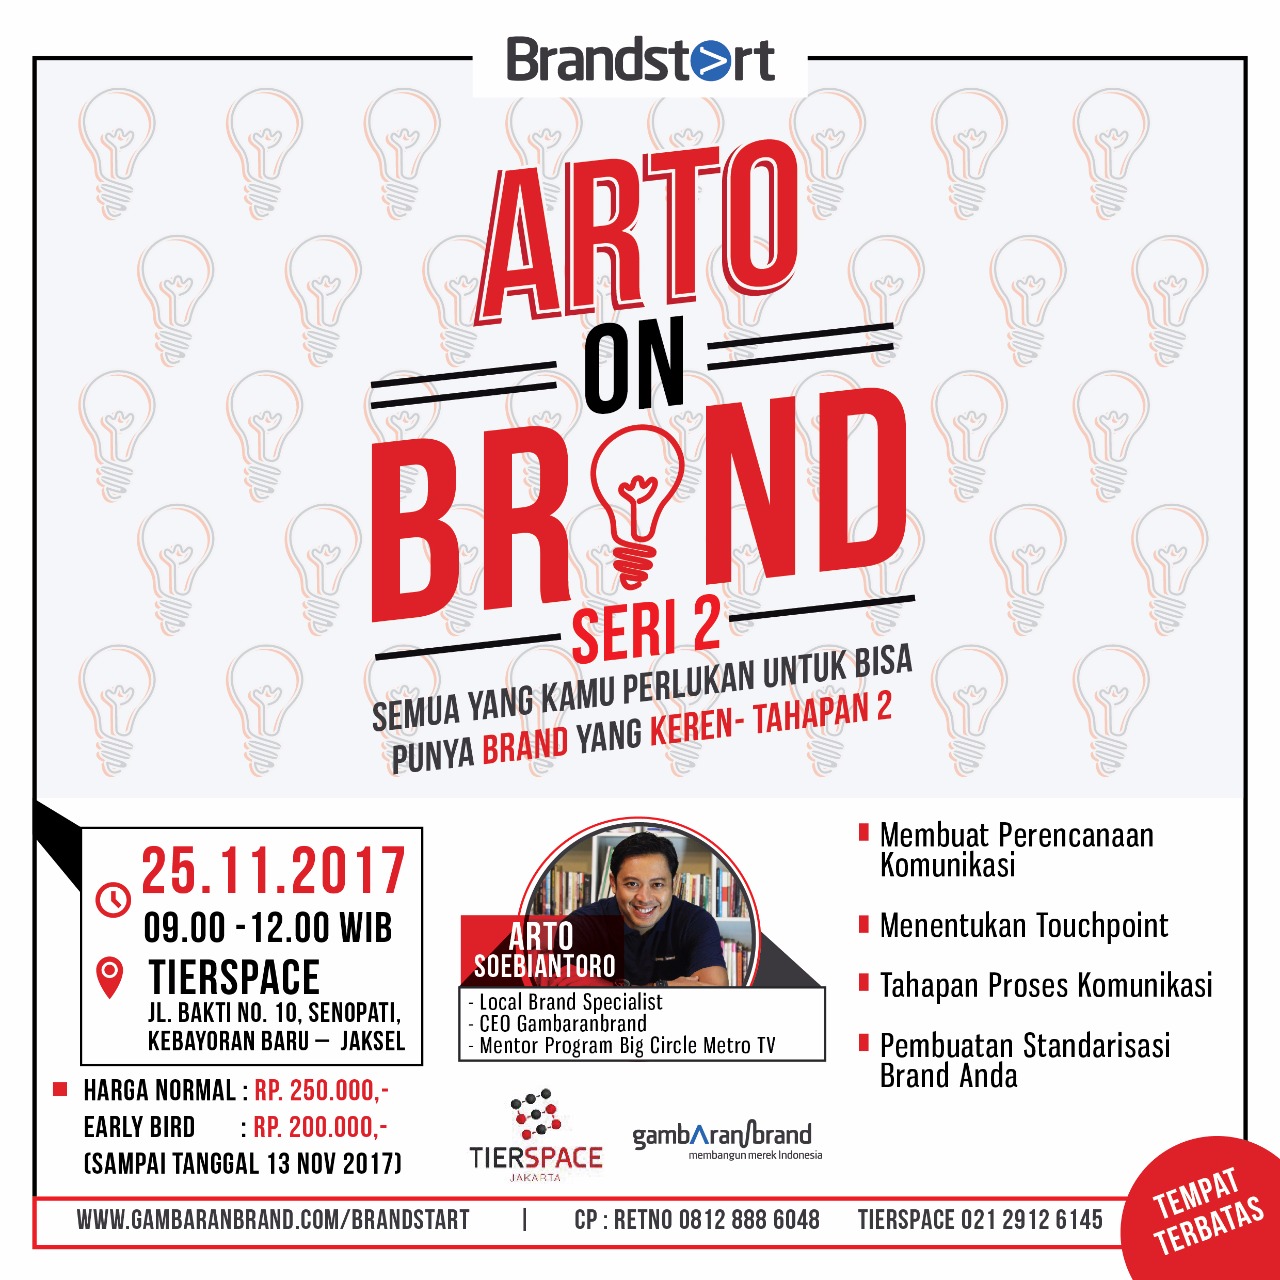 BRANDSTART - ARTO ON BRAND SERI 2